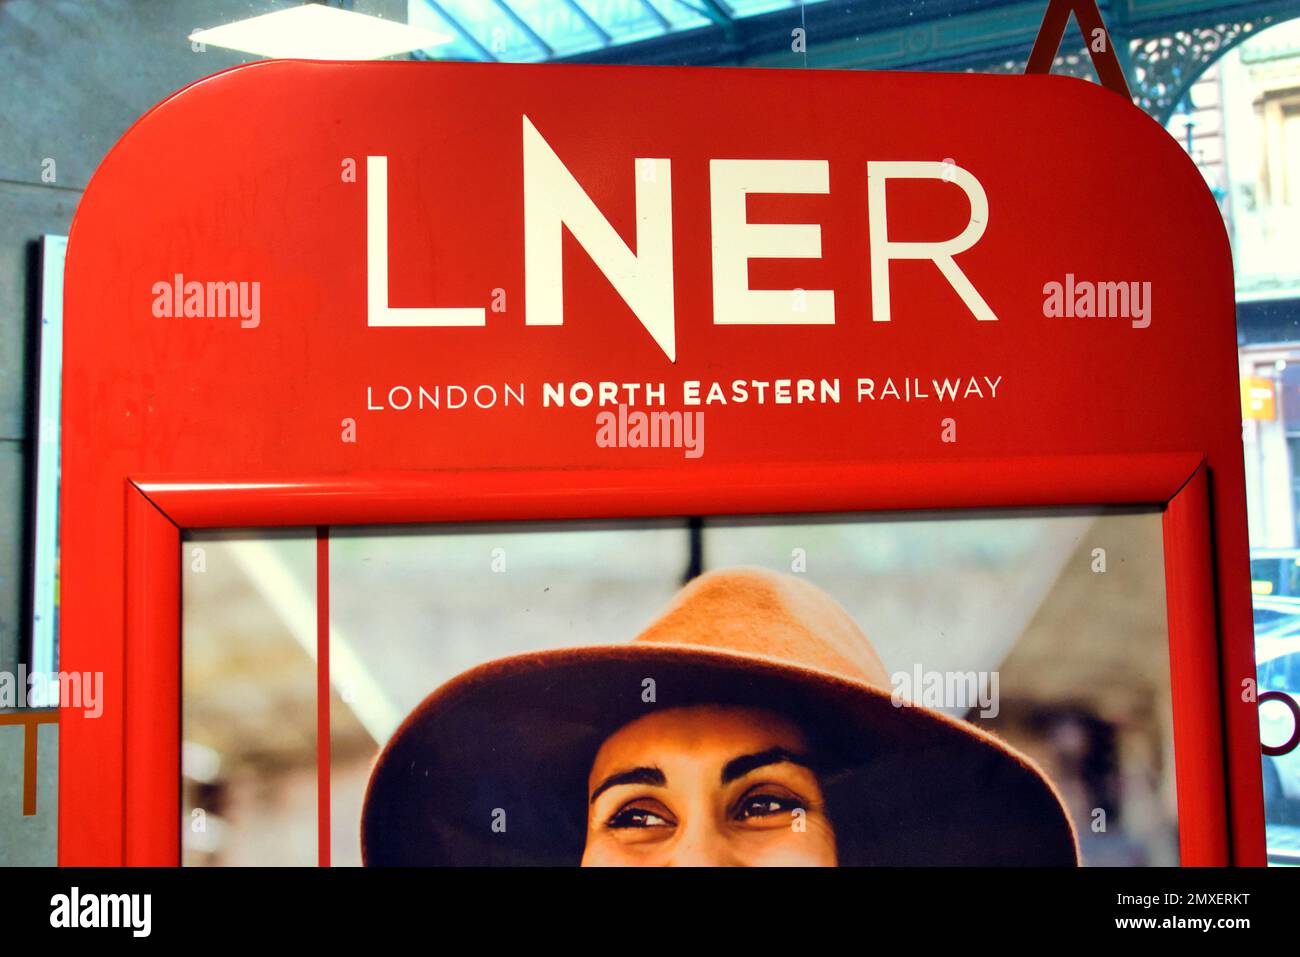 LNER advertisement in central railway station in Glasgow, Scotland, UK Stock Photo